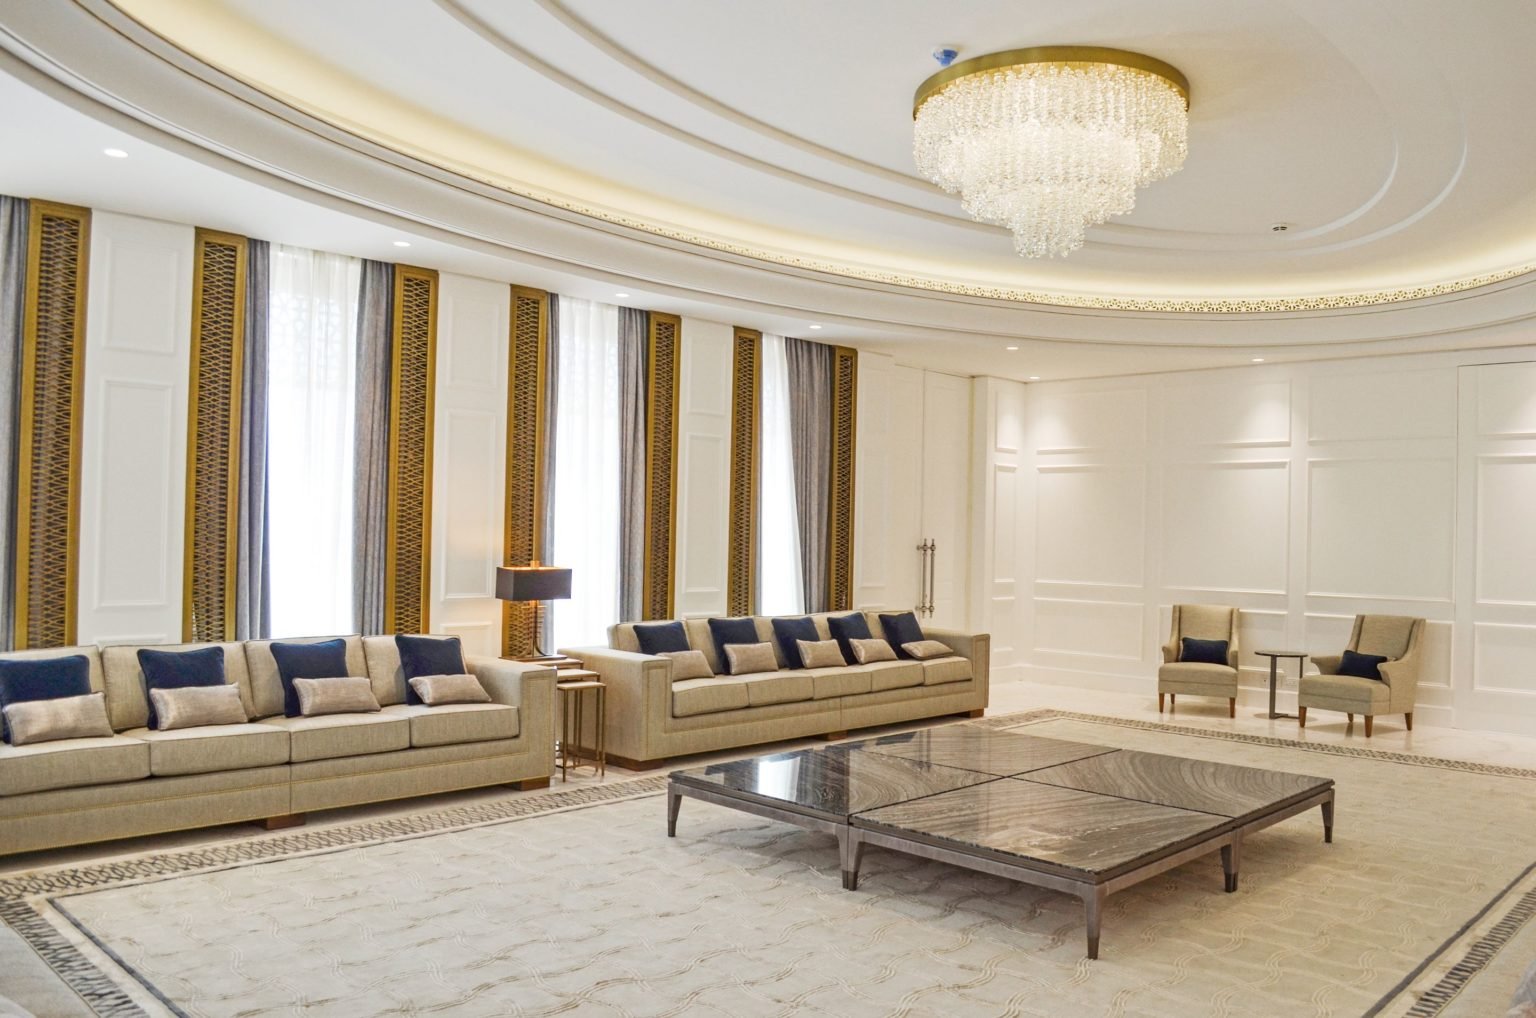 Al Khawaneej Villa, Dubai - Villa Interior Design on Love That Design